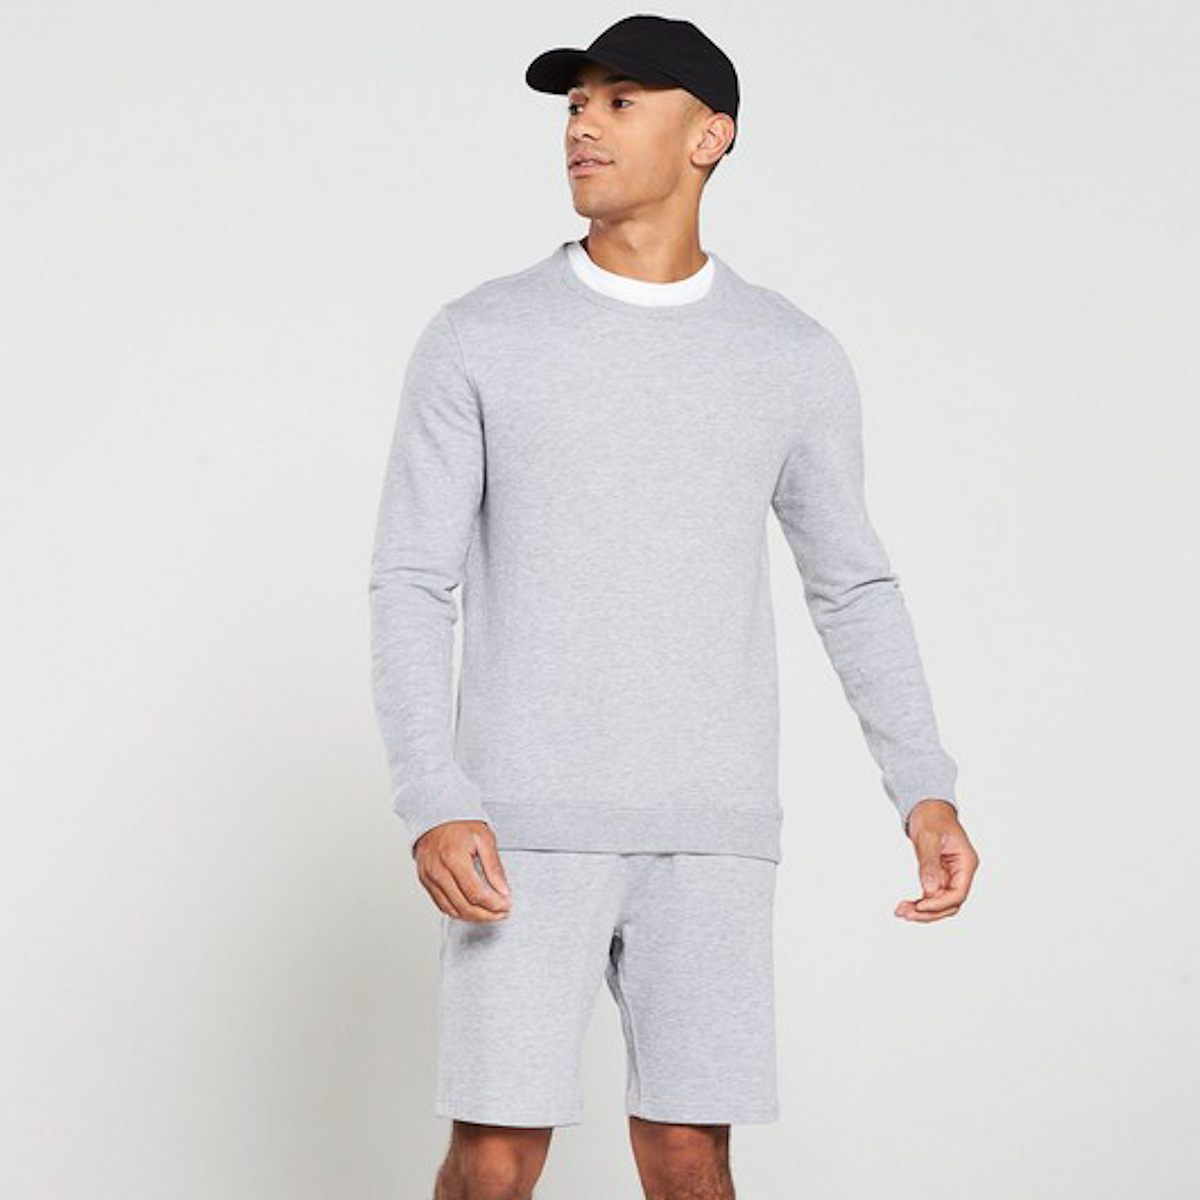 menswear-casualwear-very-summer-staples-2020-man-for-himself